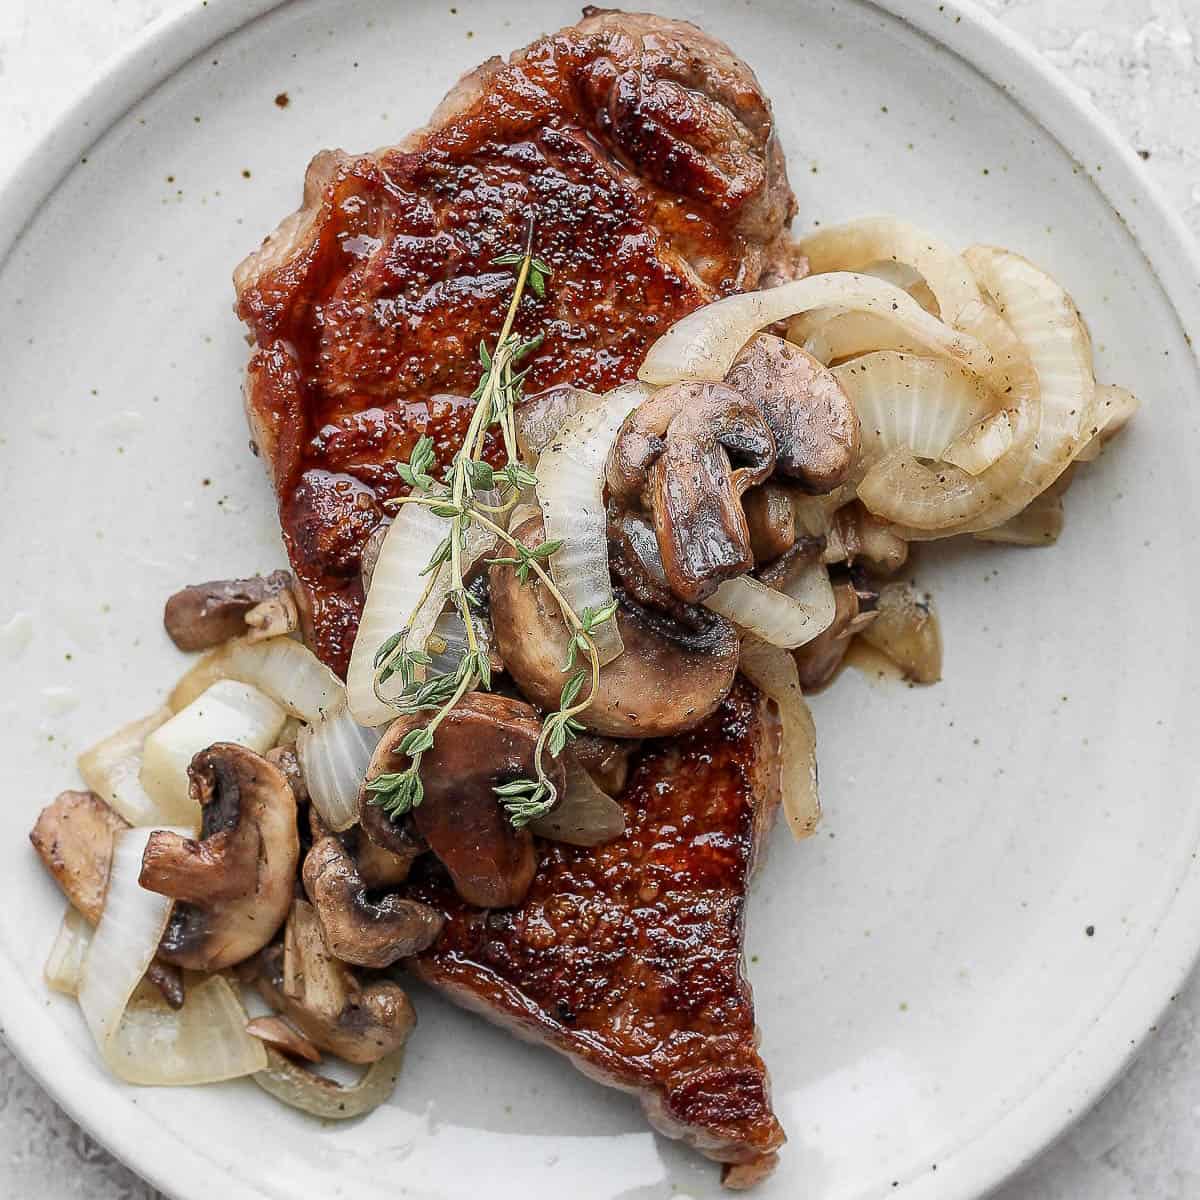 Sautéed mushrooms and onions on a steak on a plate.